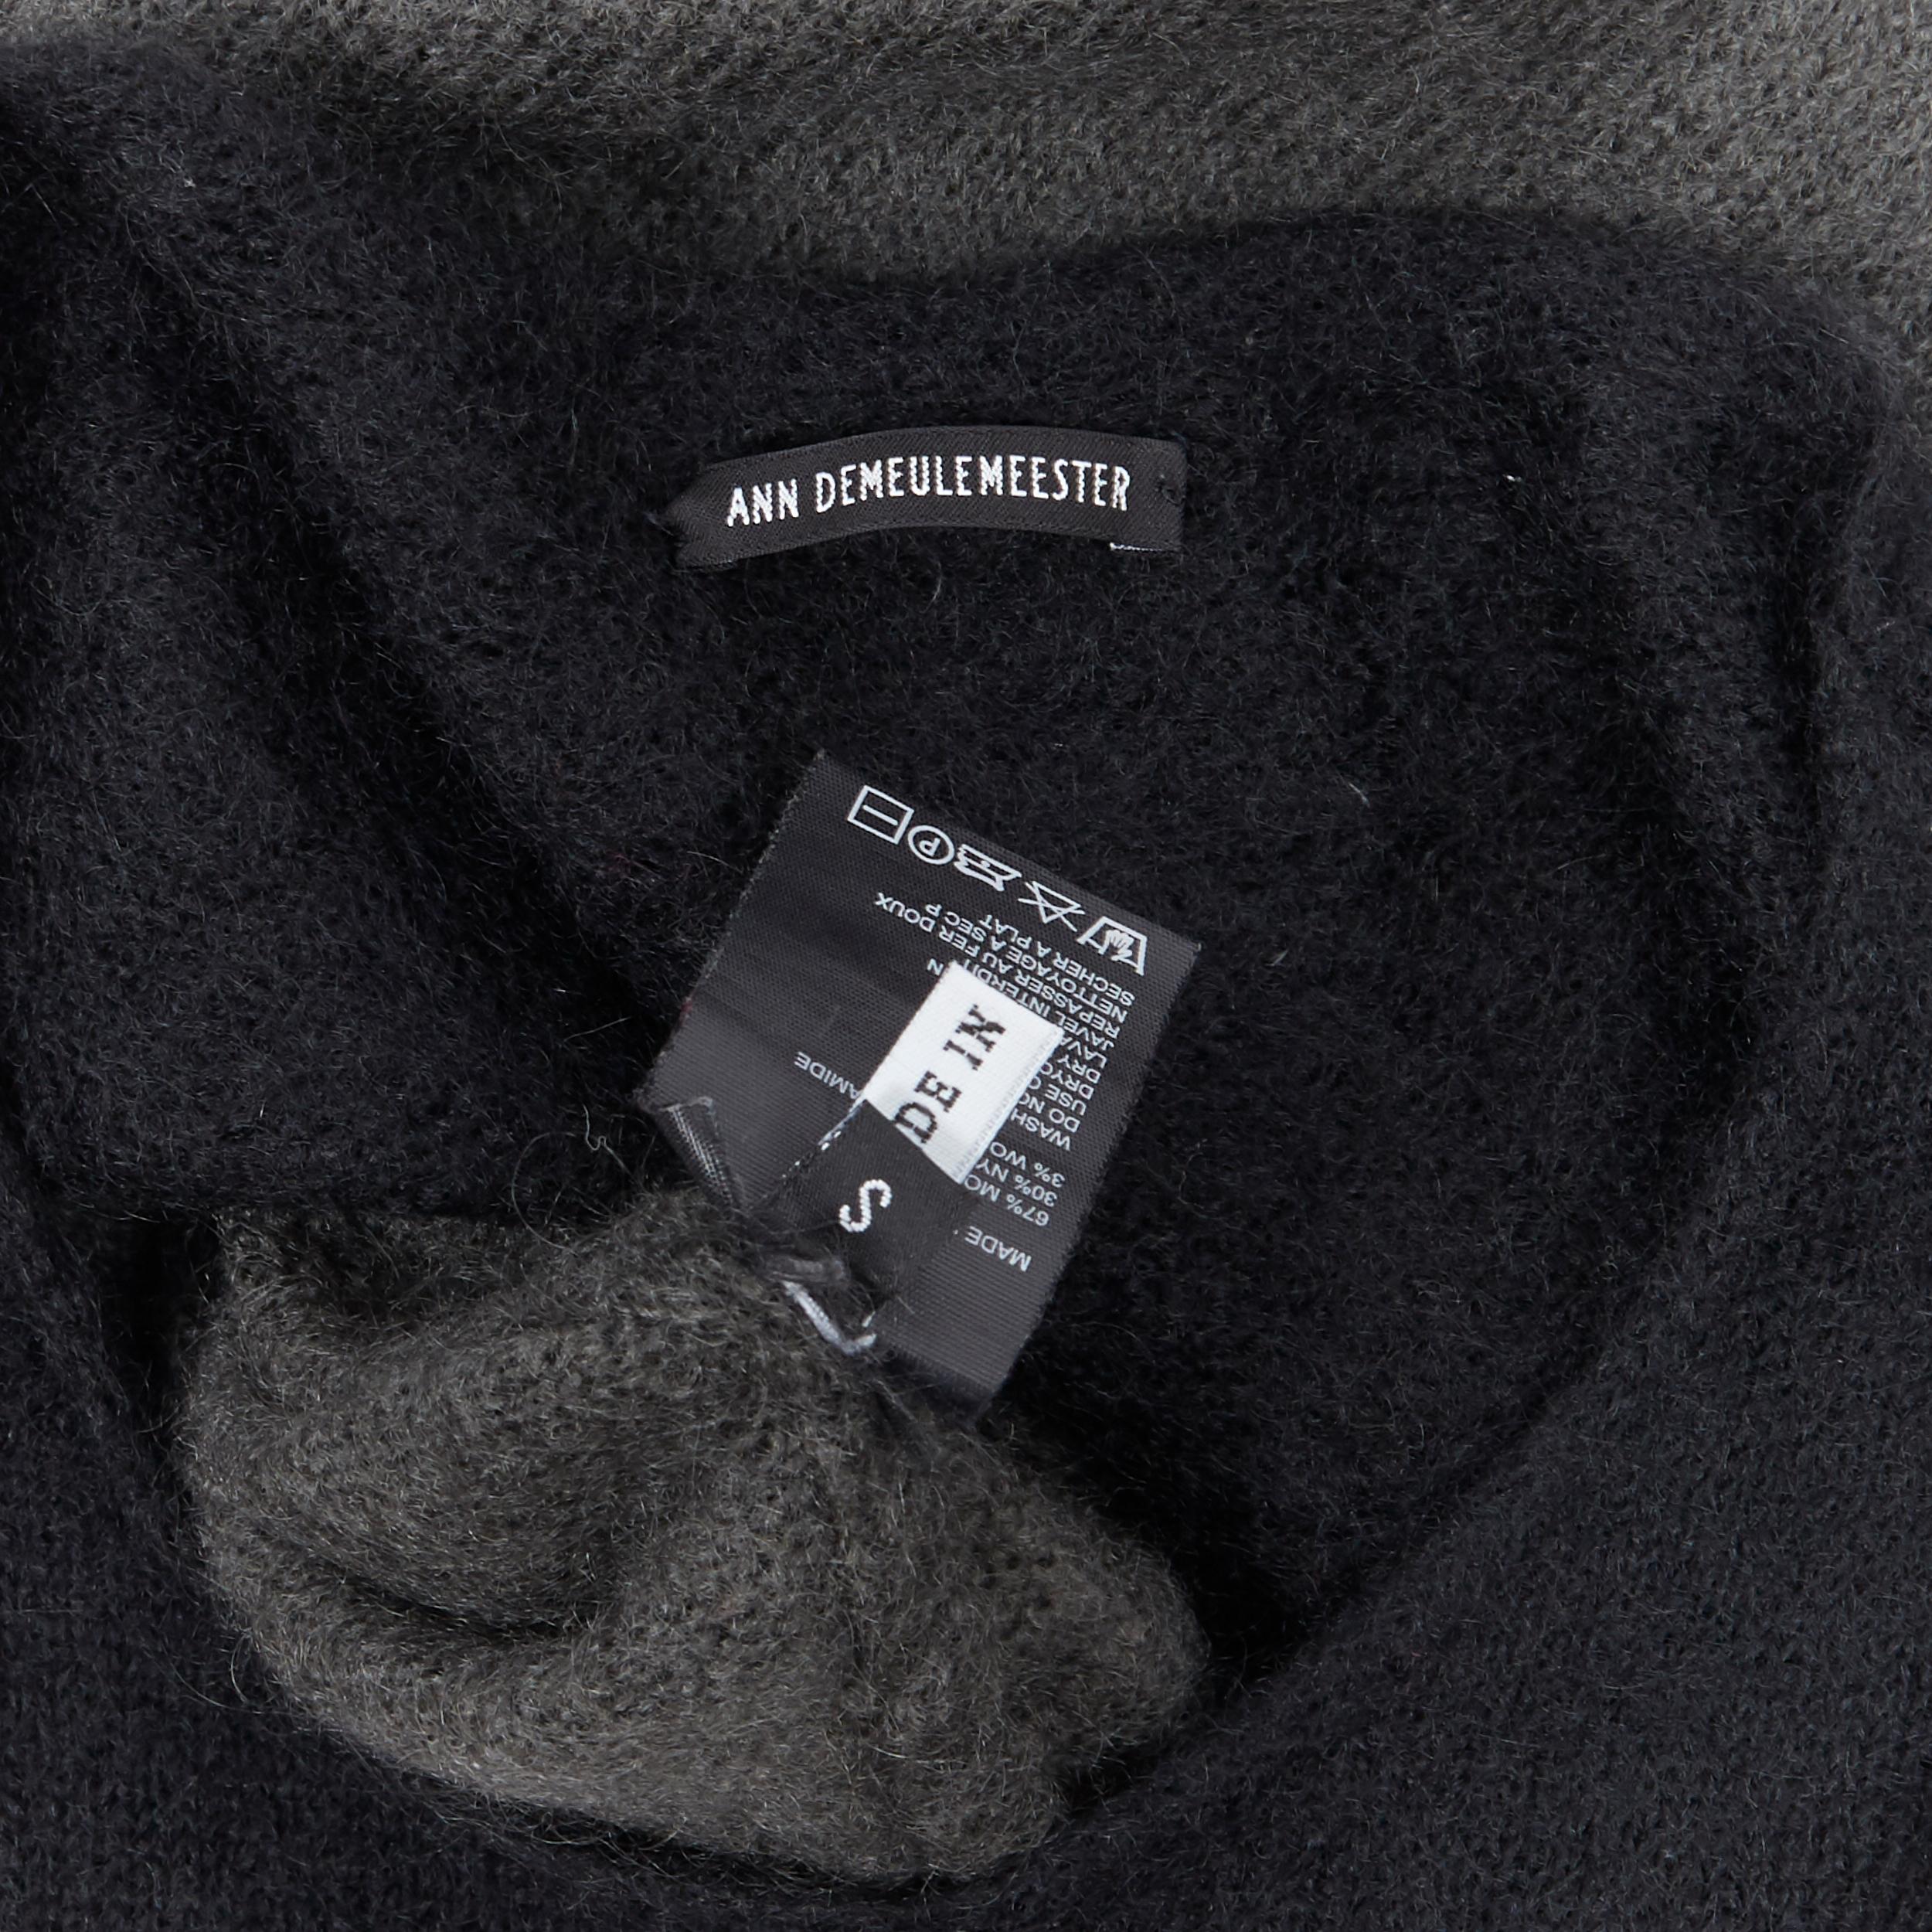 ANN DEMEULEMEESTER mohair wool black grey colorblocked sweater S 3